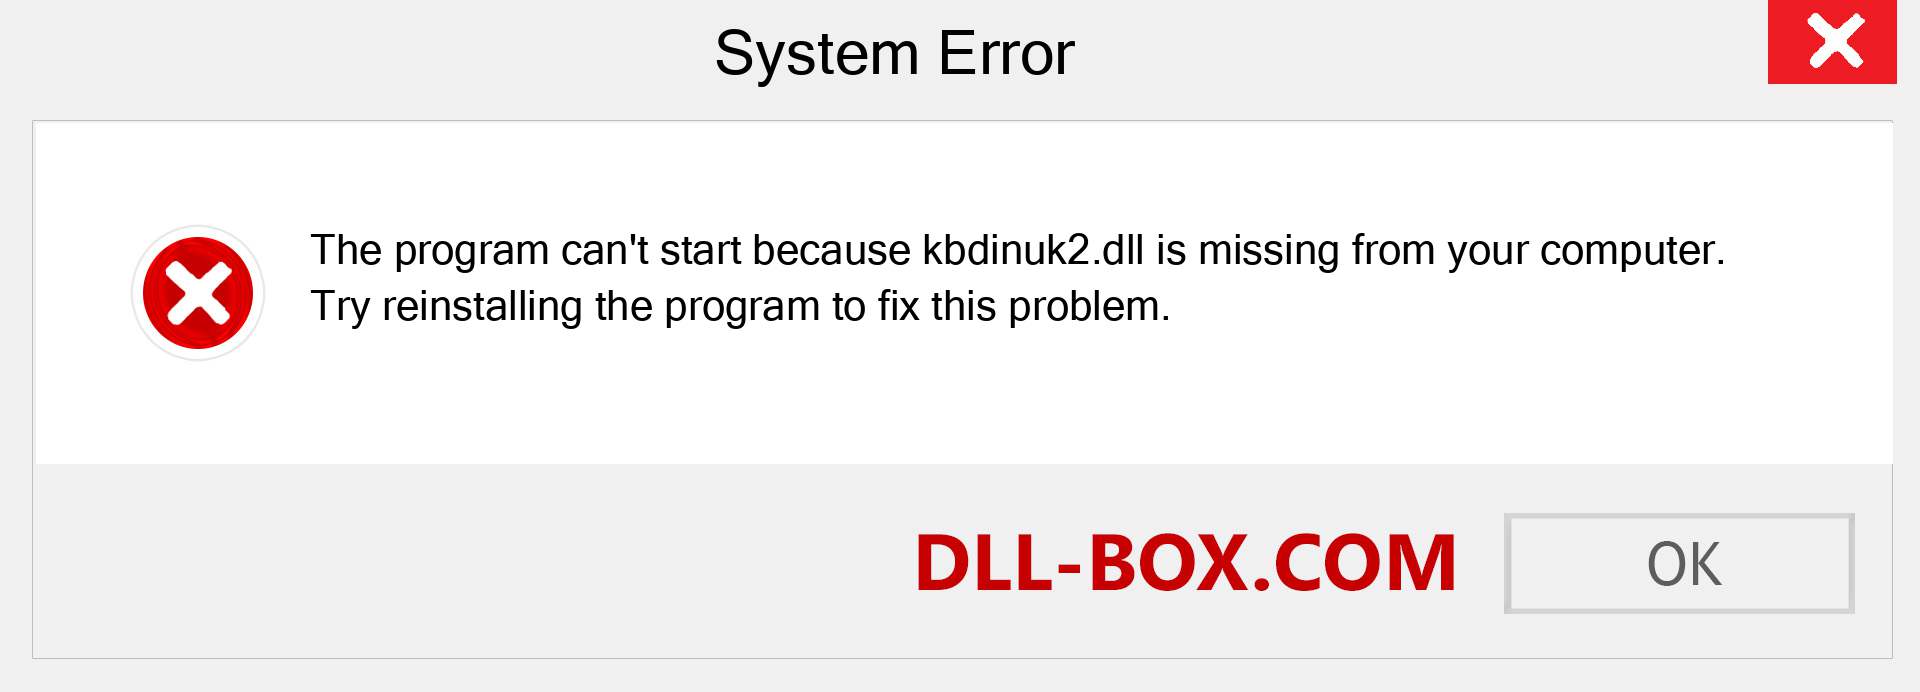  kbdinuk2.dll file is missing?. Download for Windows 7, 8, 10 - Fix  kbdinuk2 dll Missing Error on Windows, photos, images